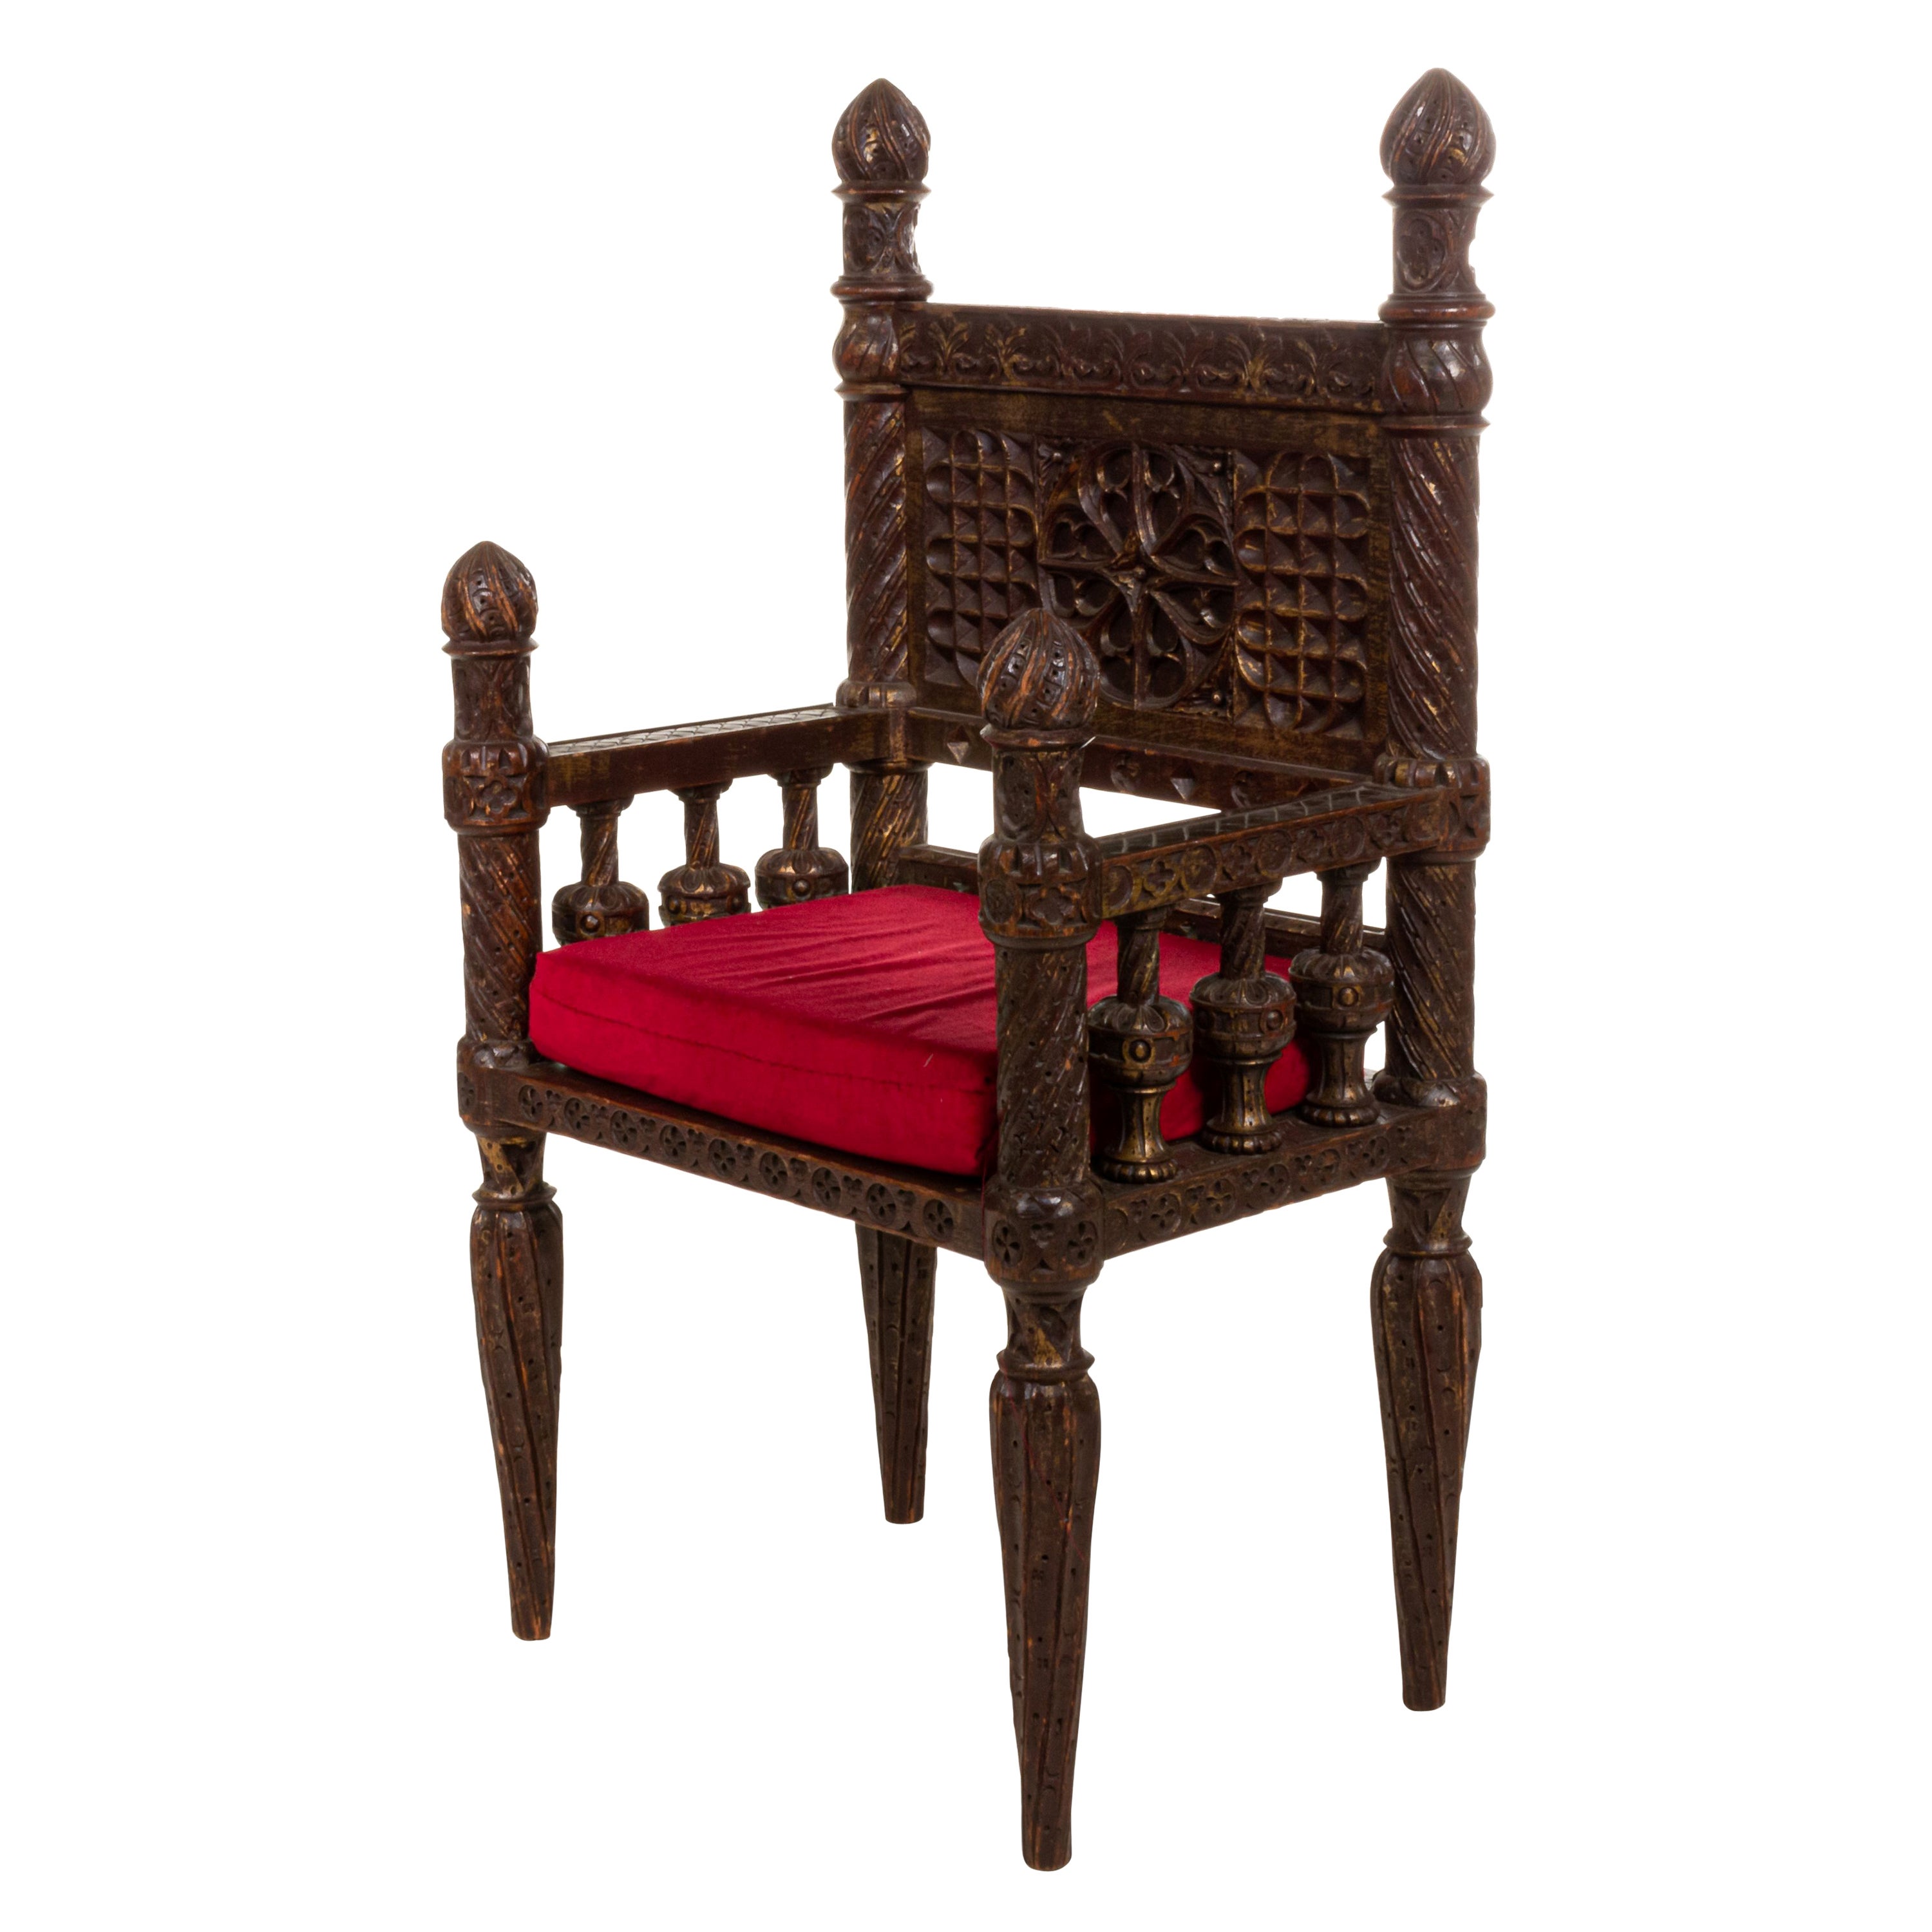 Burgunderroter Sessel im neogotischen Revival-Stil des 19. Jahrhunderts